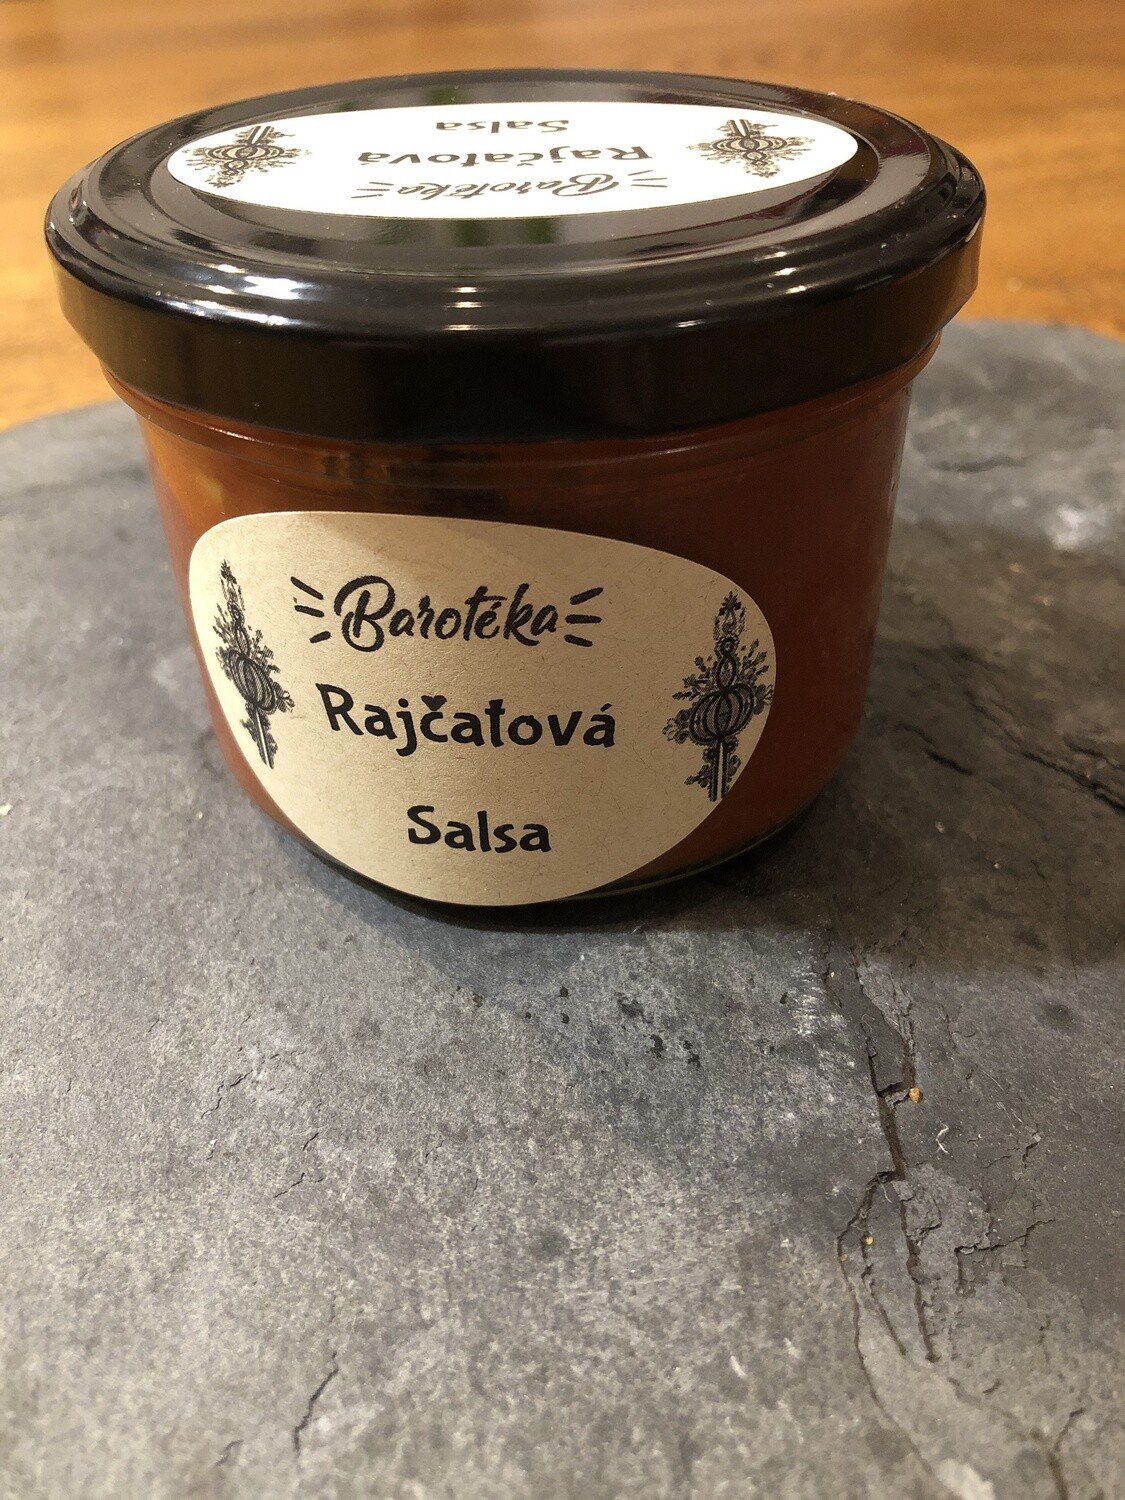 Rajčatová salsa - Barotéka